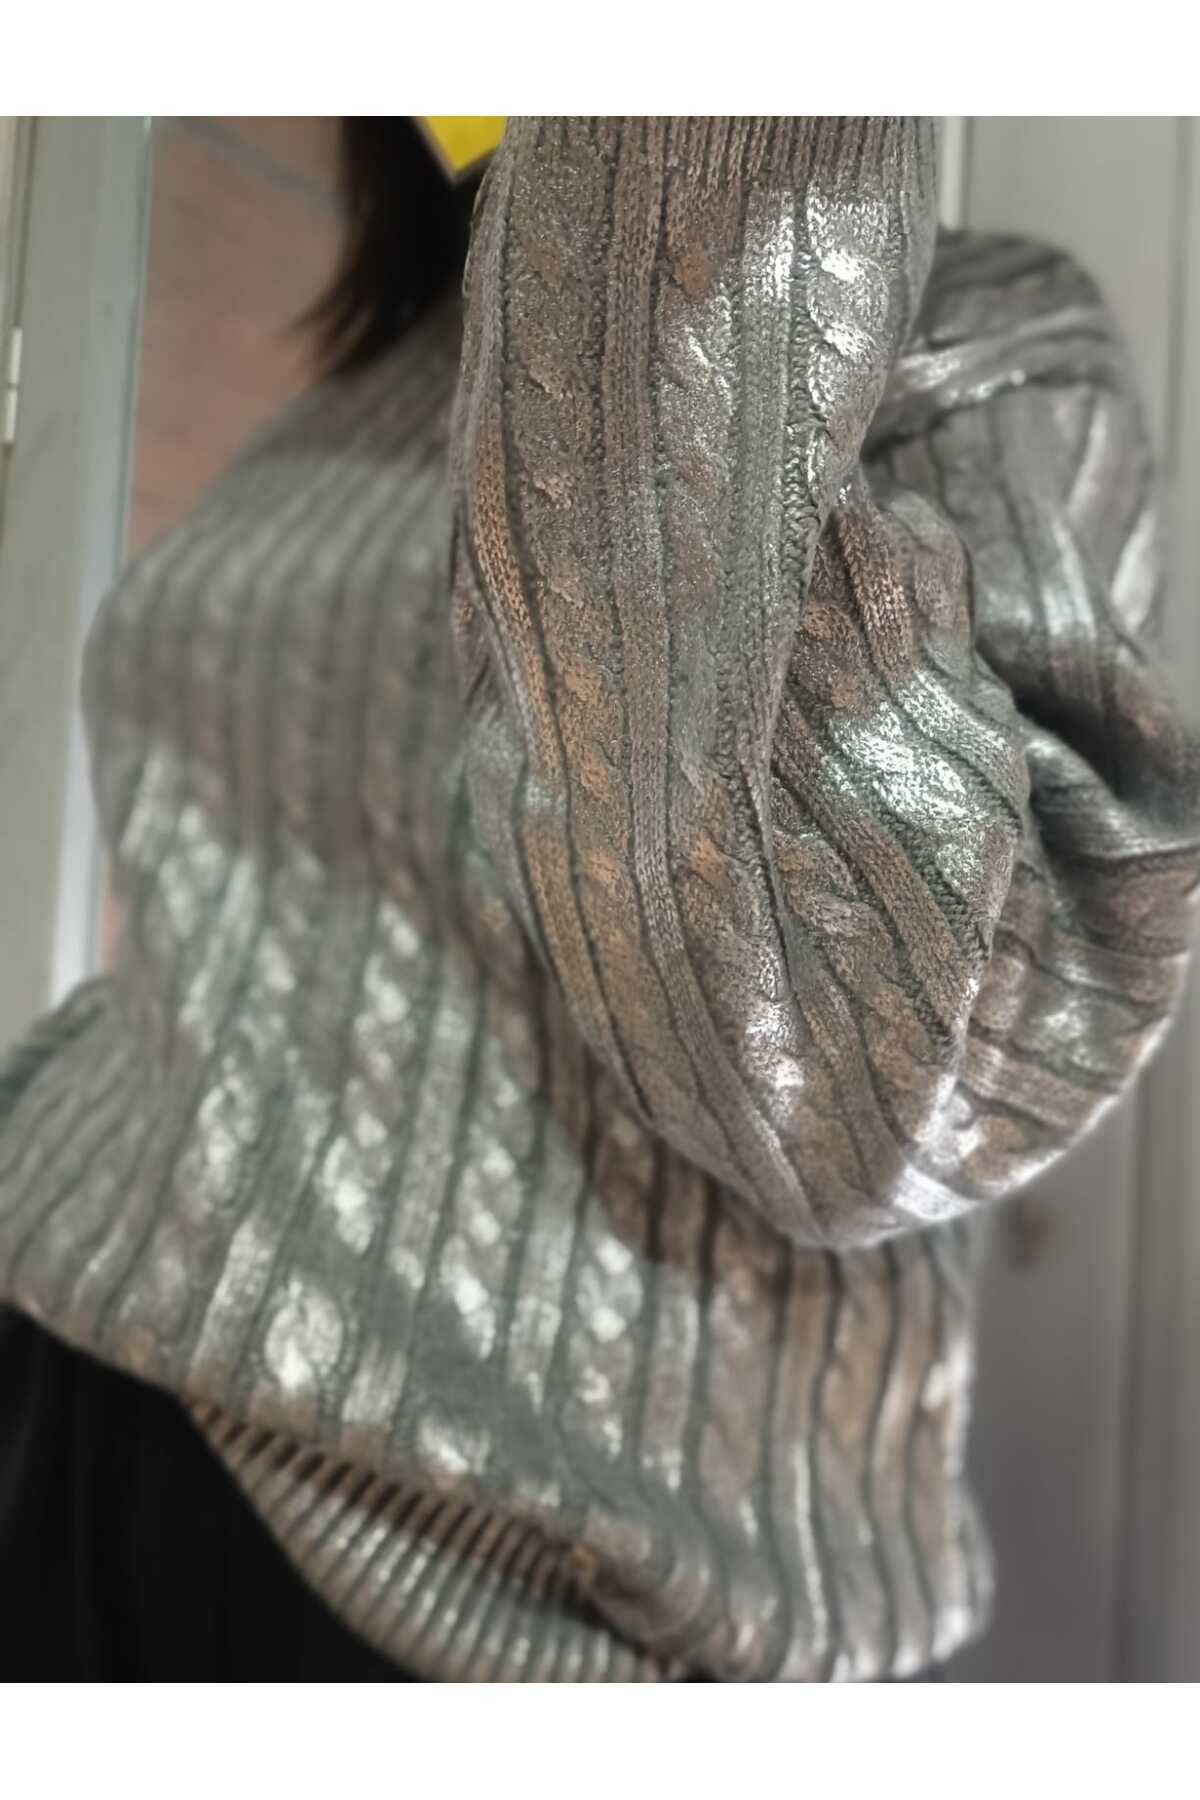 Leaf Braided Gray Sweater - Silver - Top - LussoCA